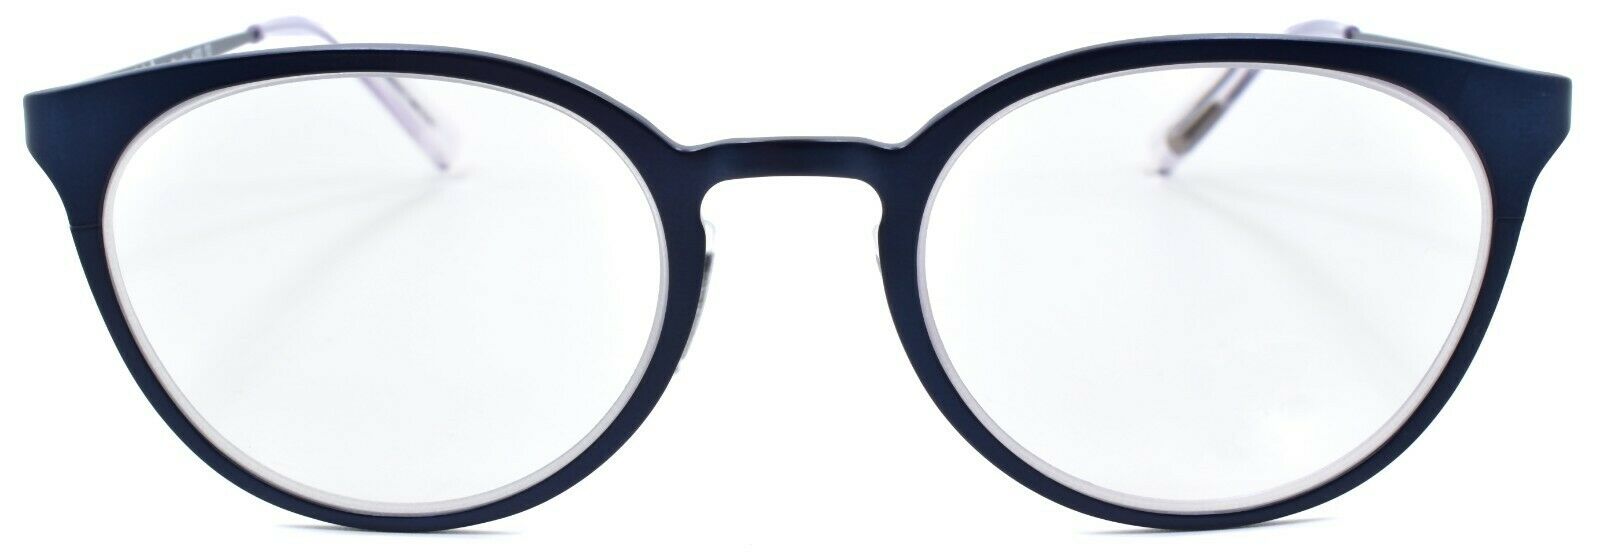 2-Eyebobs Jim Dandy 600 10 Unisex Reading Glasses Navy Blue +1.50-842754137812-IKSpecs